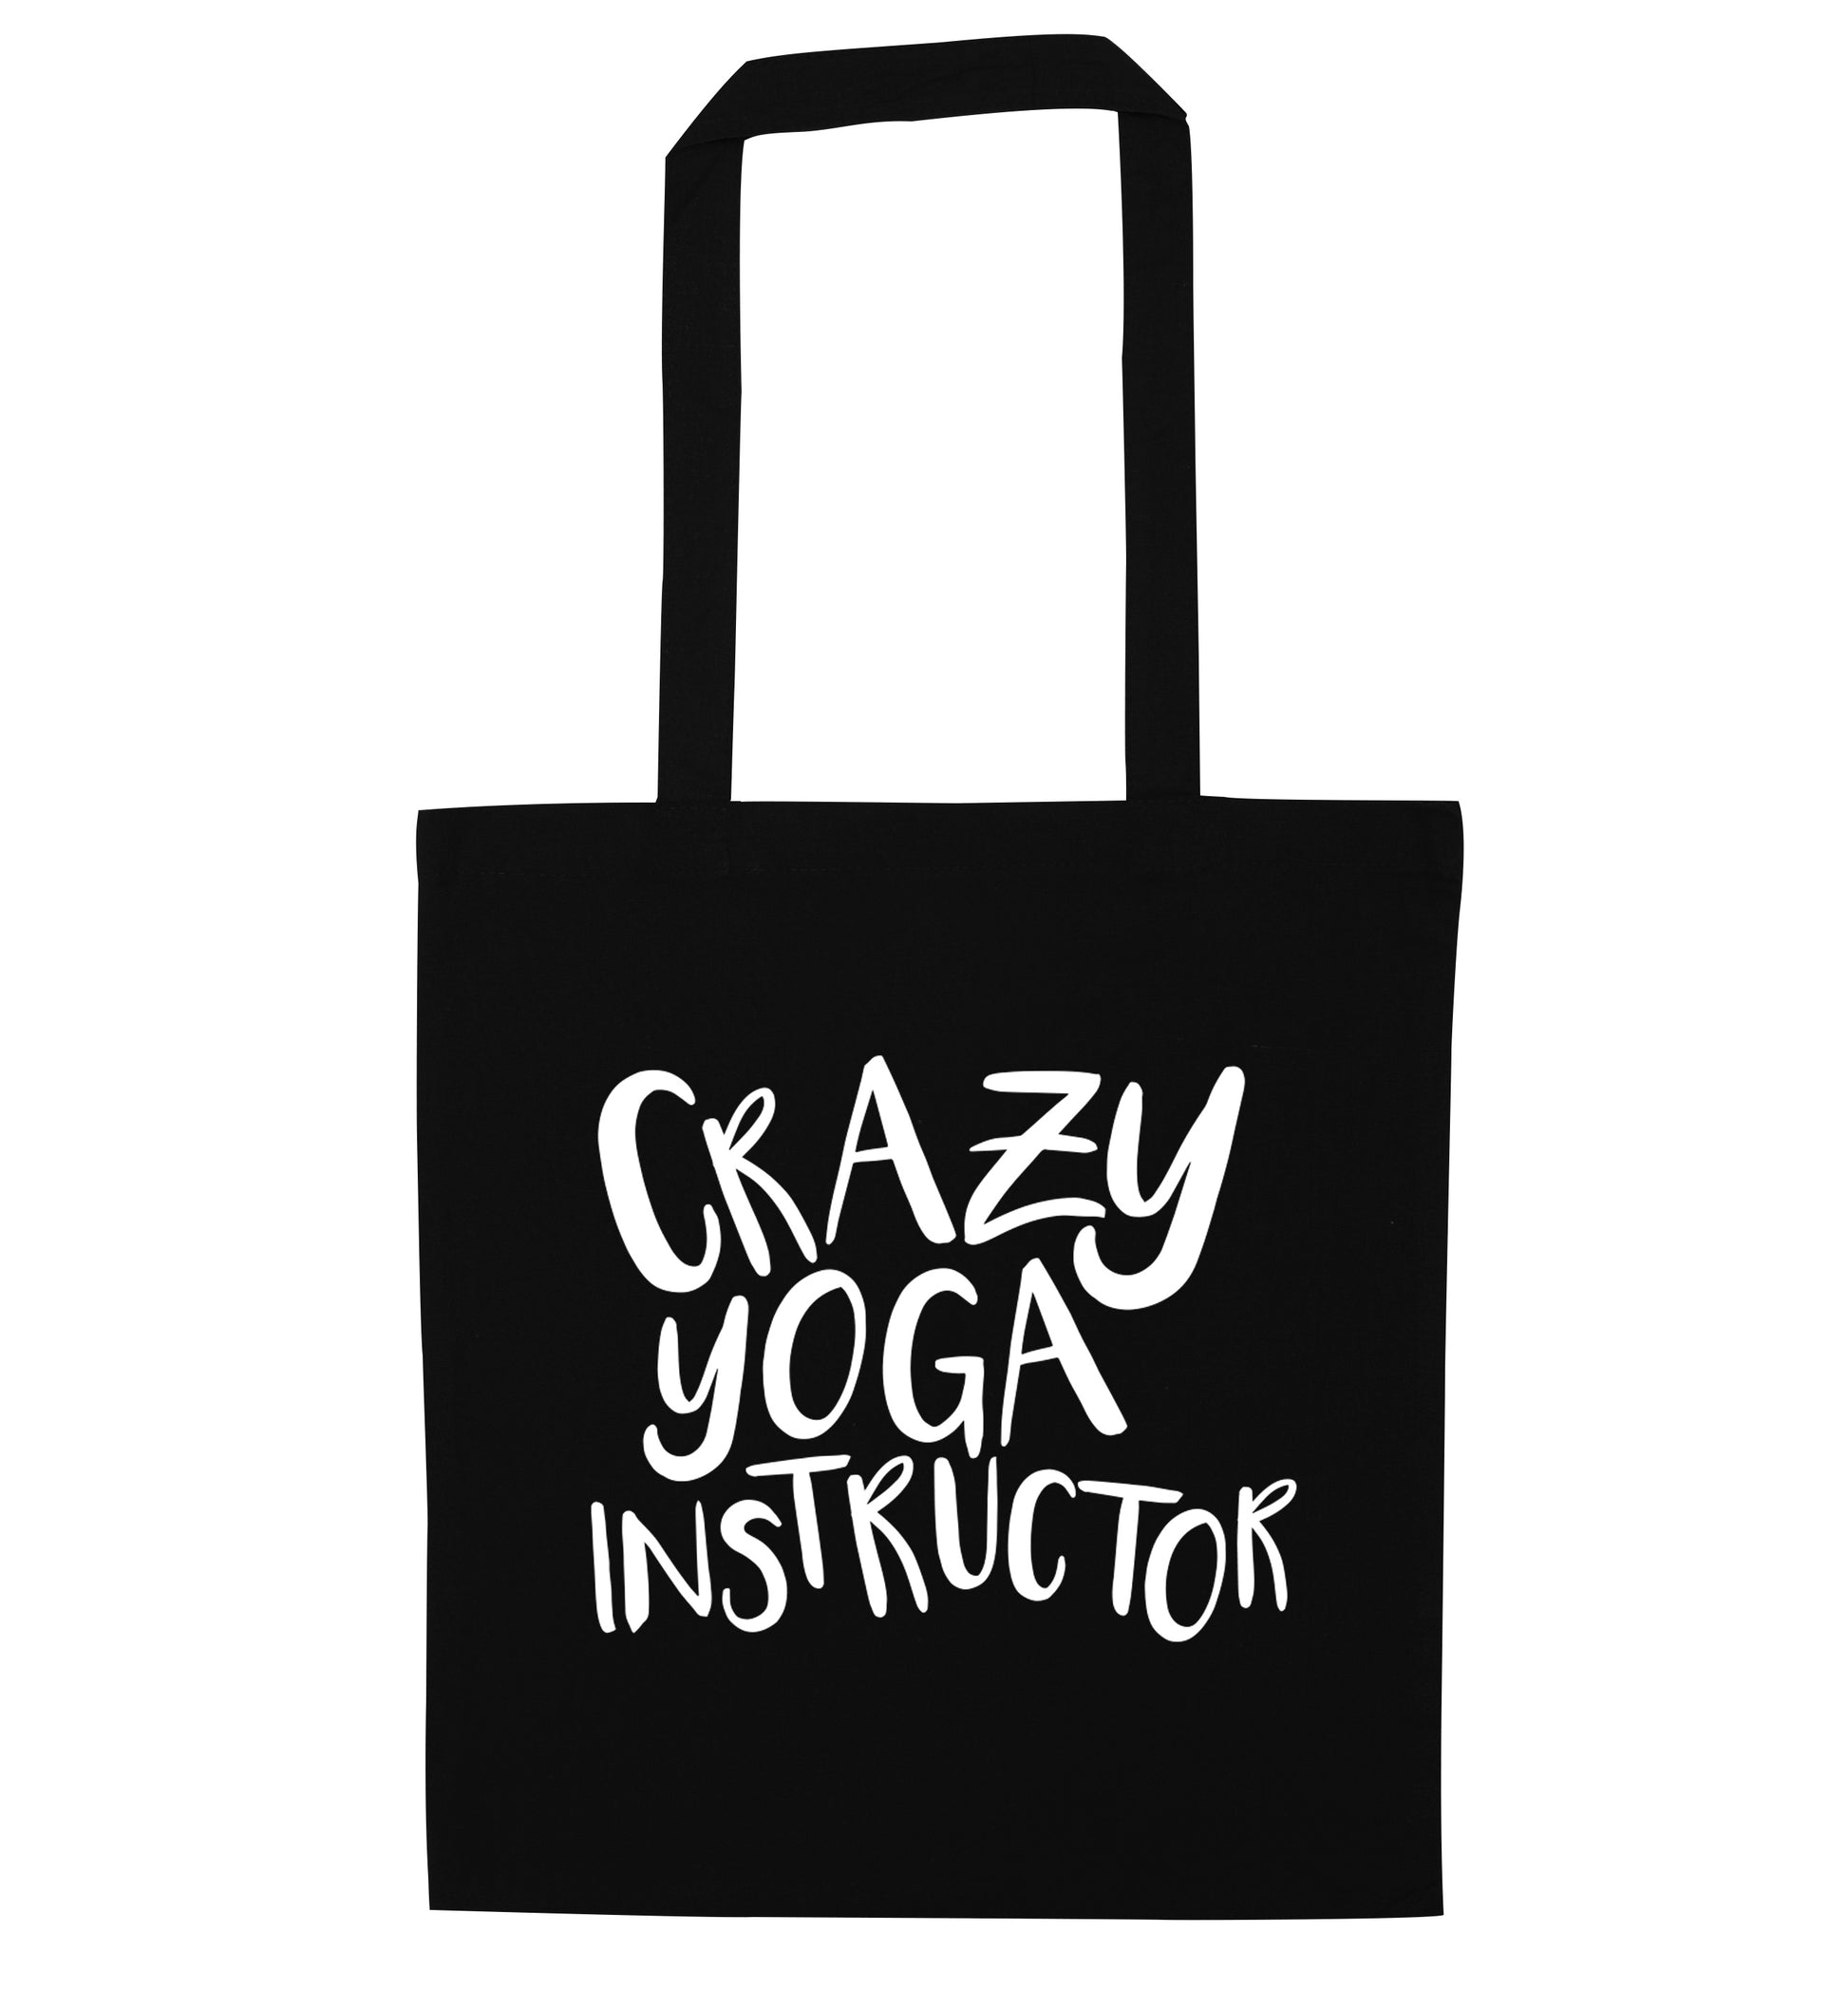 Crazy yoga instructor black tote bag